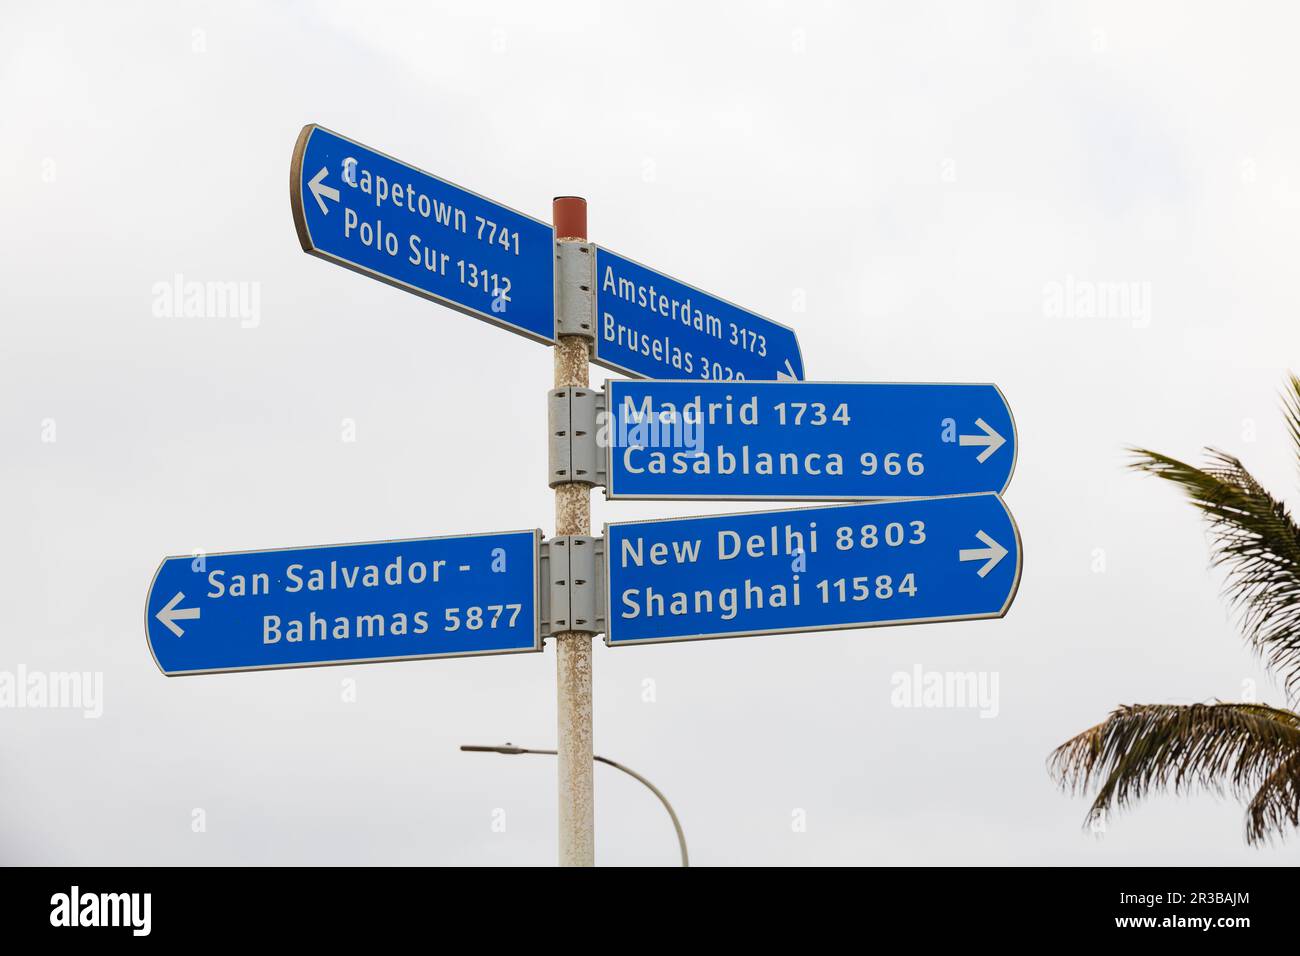 Signpost with international destinations. Capetown, Polo Sur, Amsterdam, Bruselas, Madrid, San Salvador, Casablanca, new Delhi, Shanghai, Bahamas. Las Stock Photo